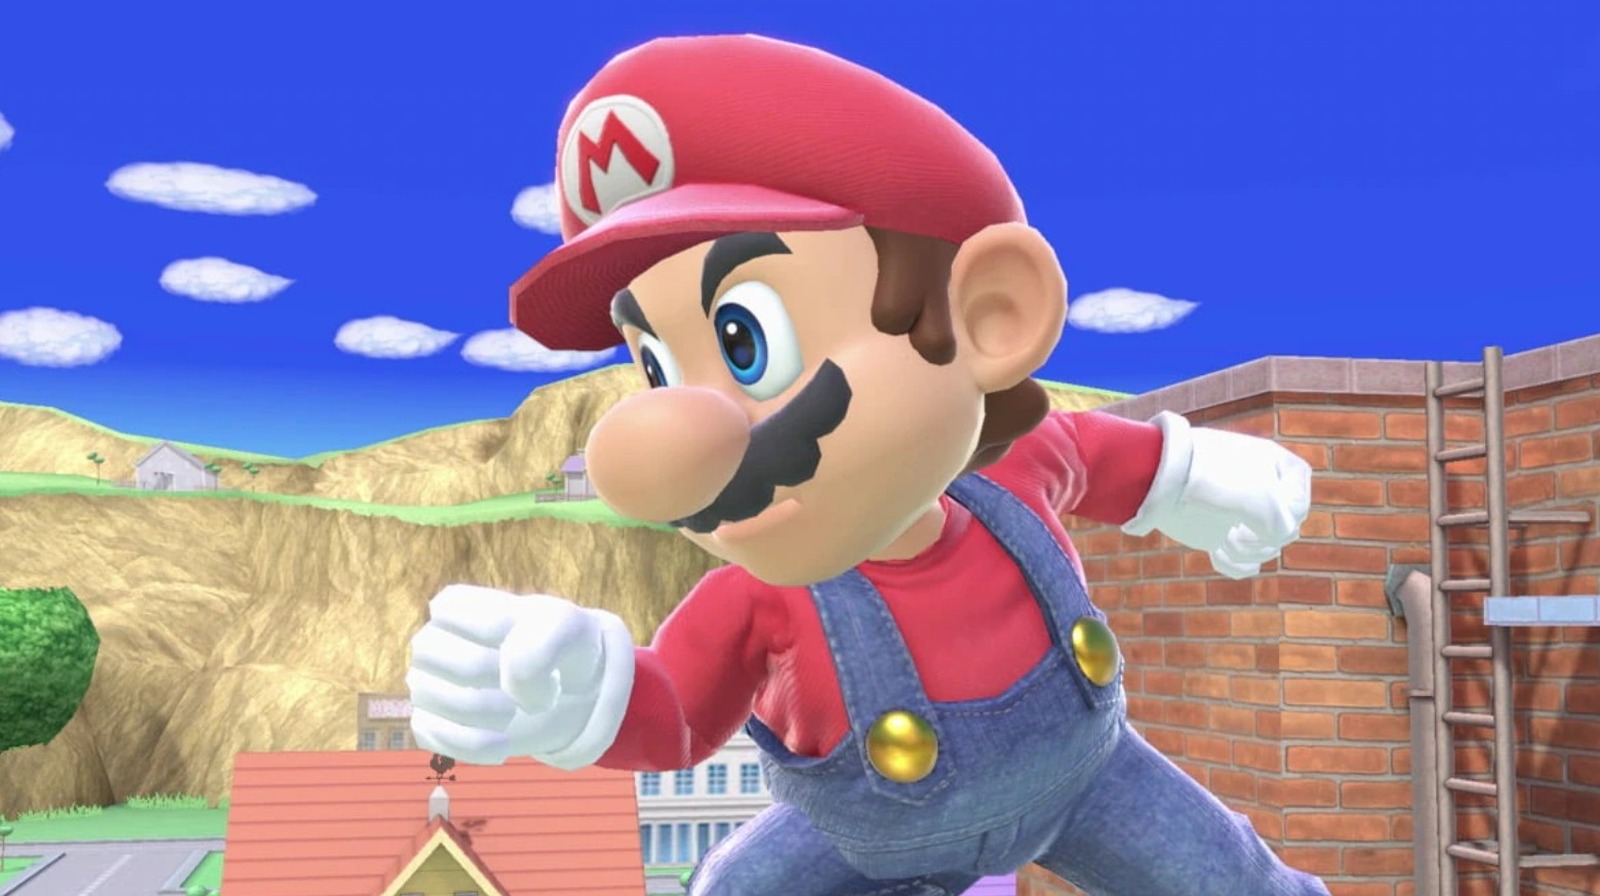 Mario smash bros. Супер смэш БРОС ультимейт Марио. Super Smash Bros Ultimate Mario. Super Mario Smash Bros игра.